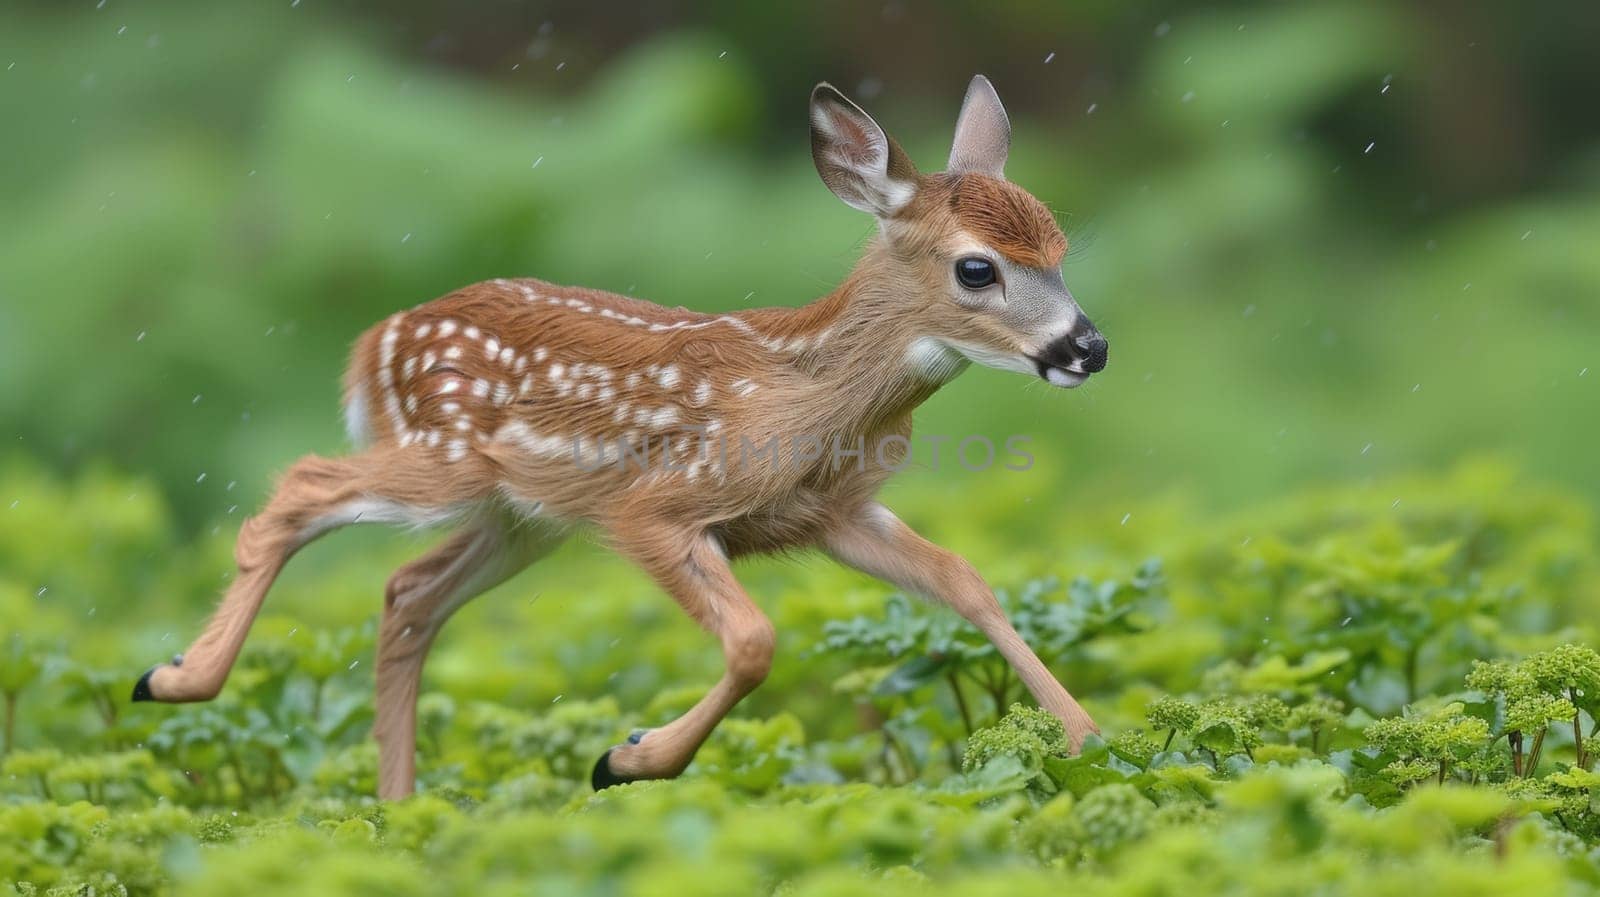 A baby deer running through a field of green grass, AI by starush